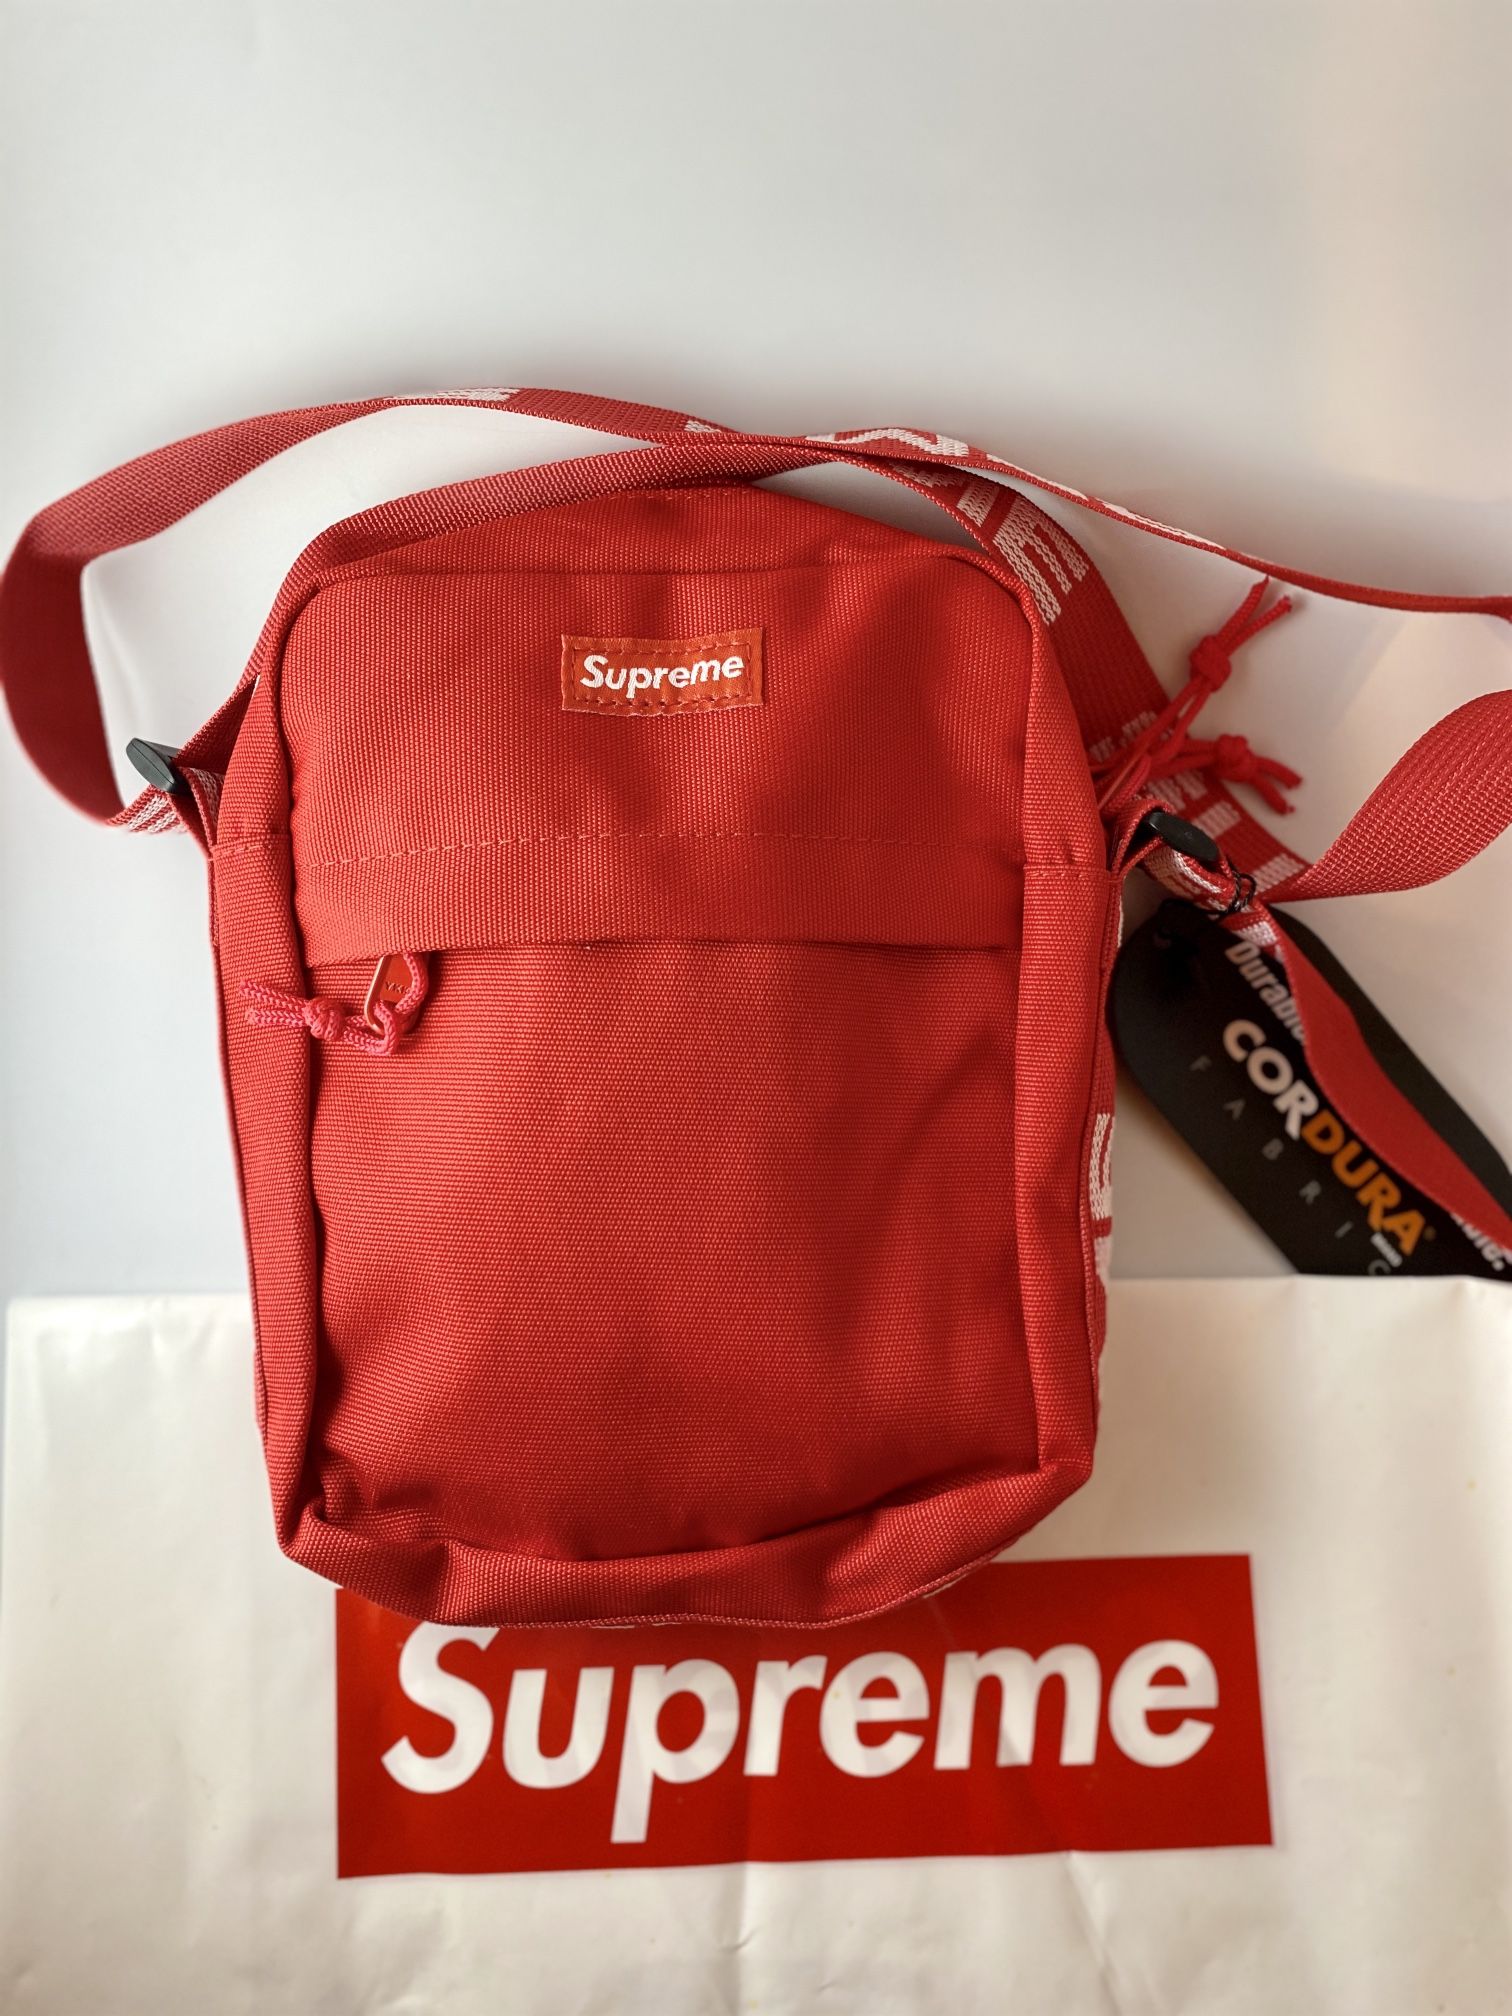 Supreme Shoulder Bag All Colors Available Brand New 